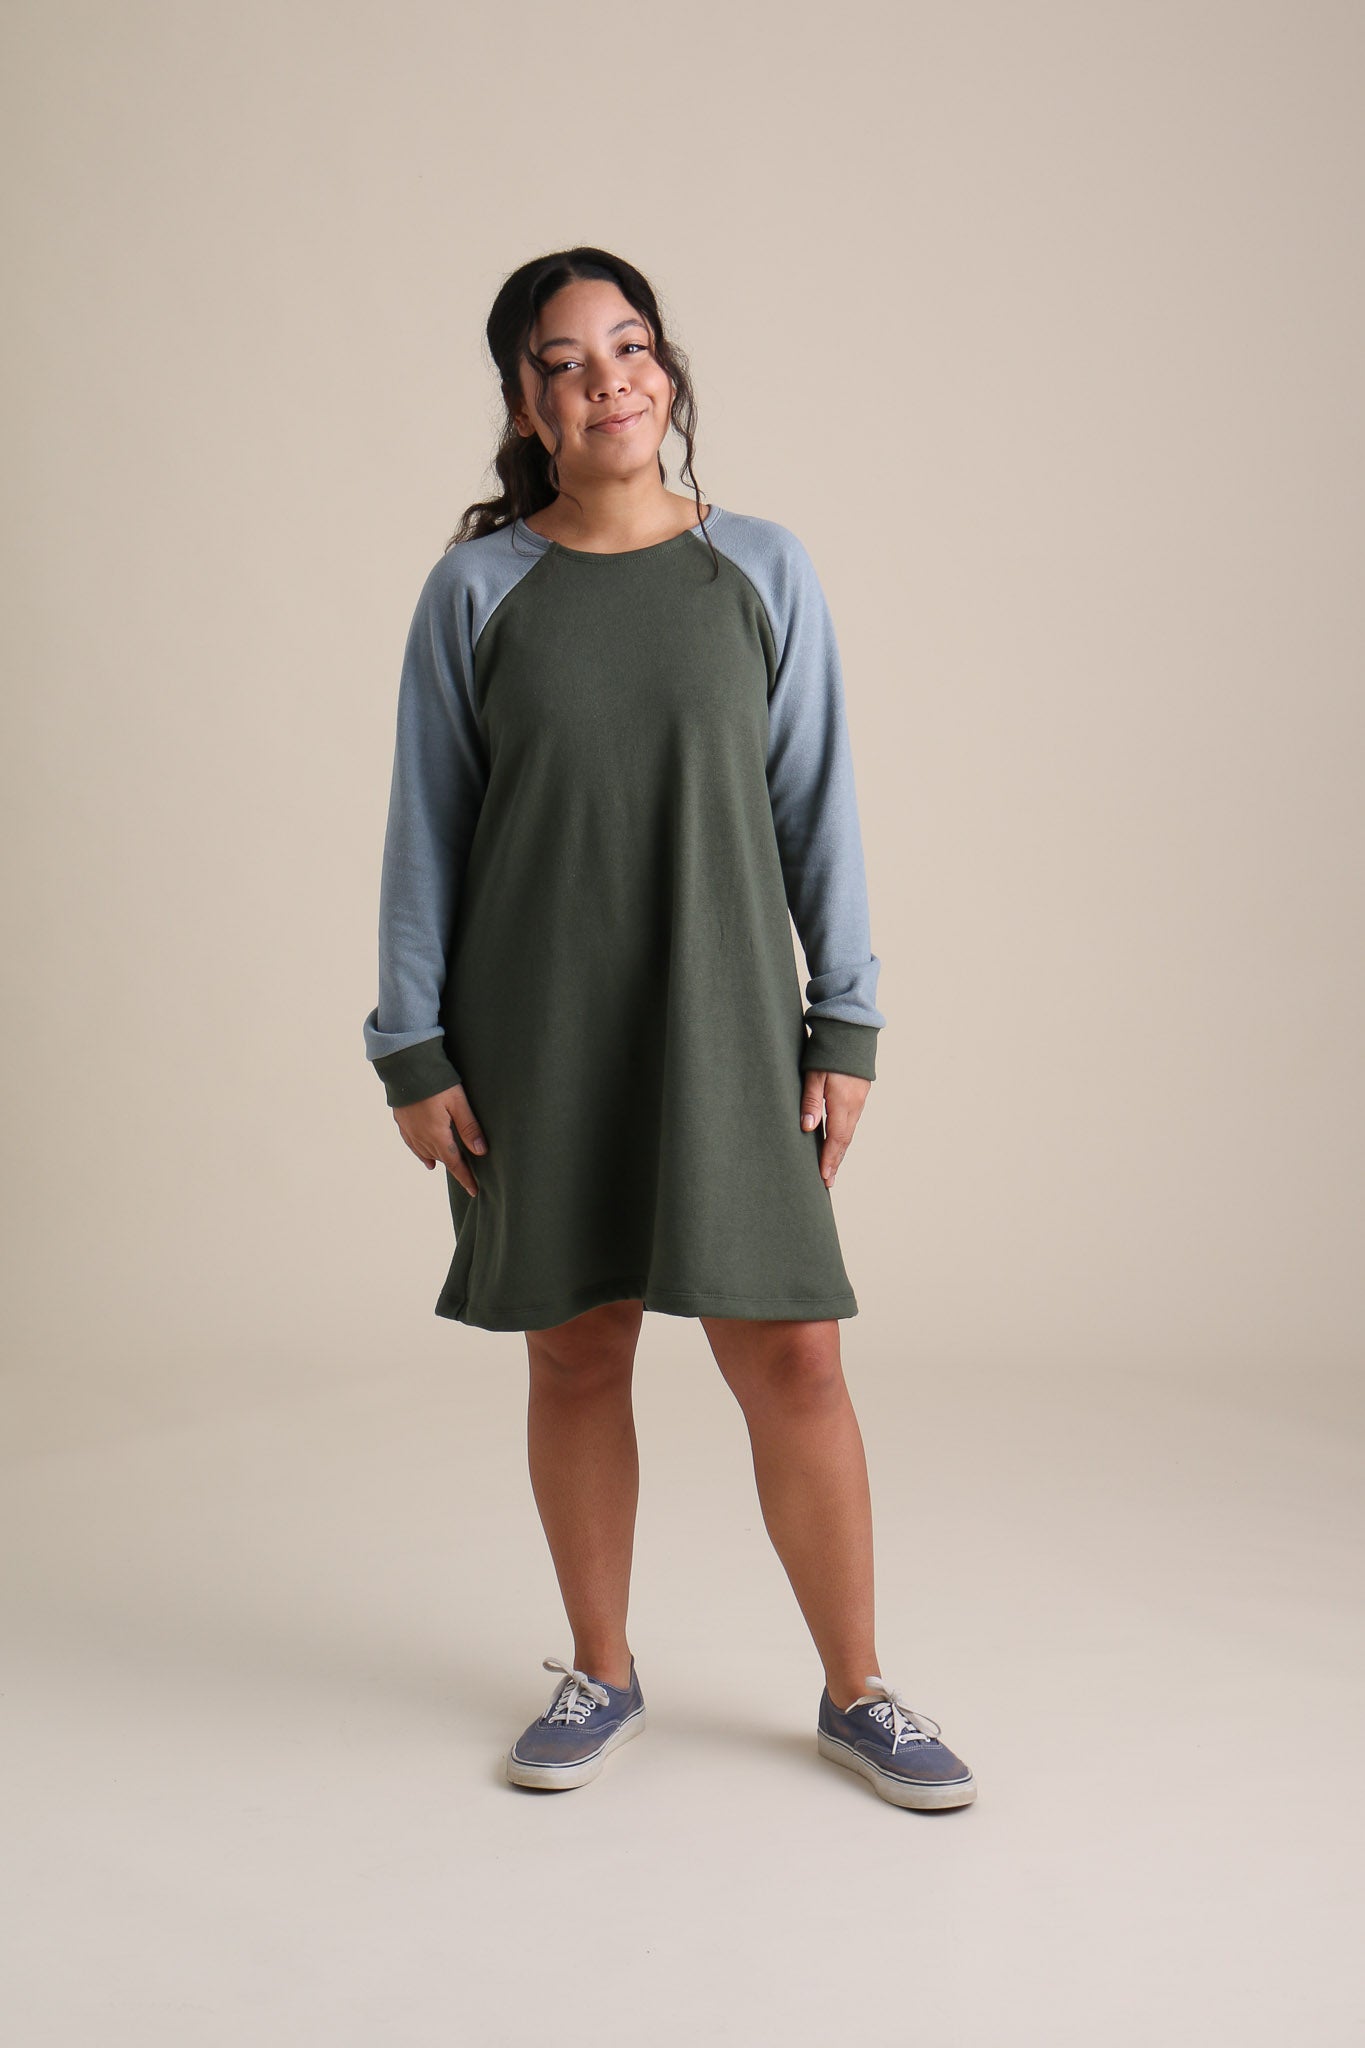 Women's Plus Size T-shirt Dress 